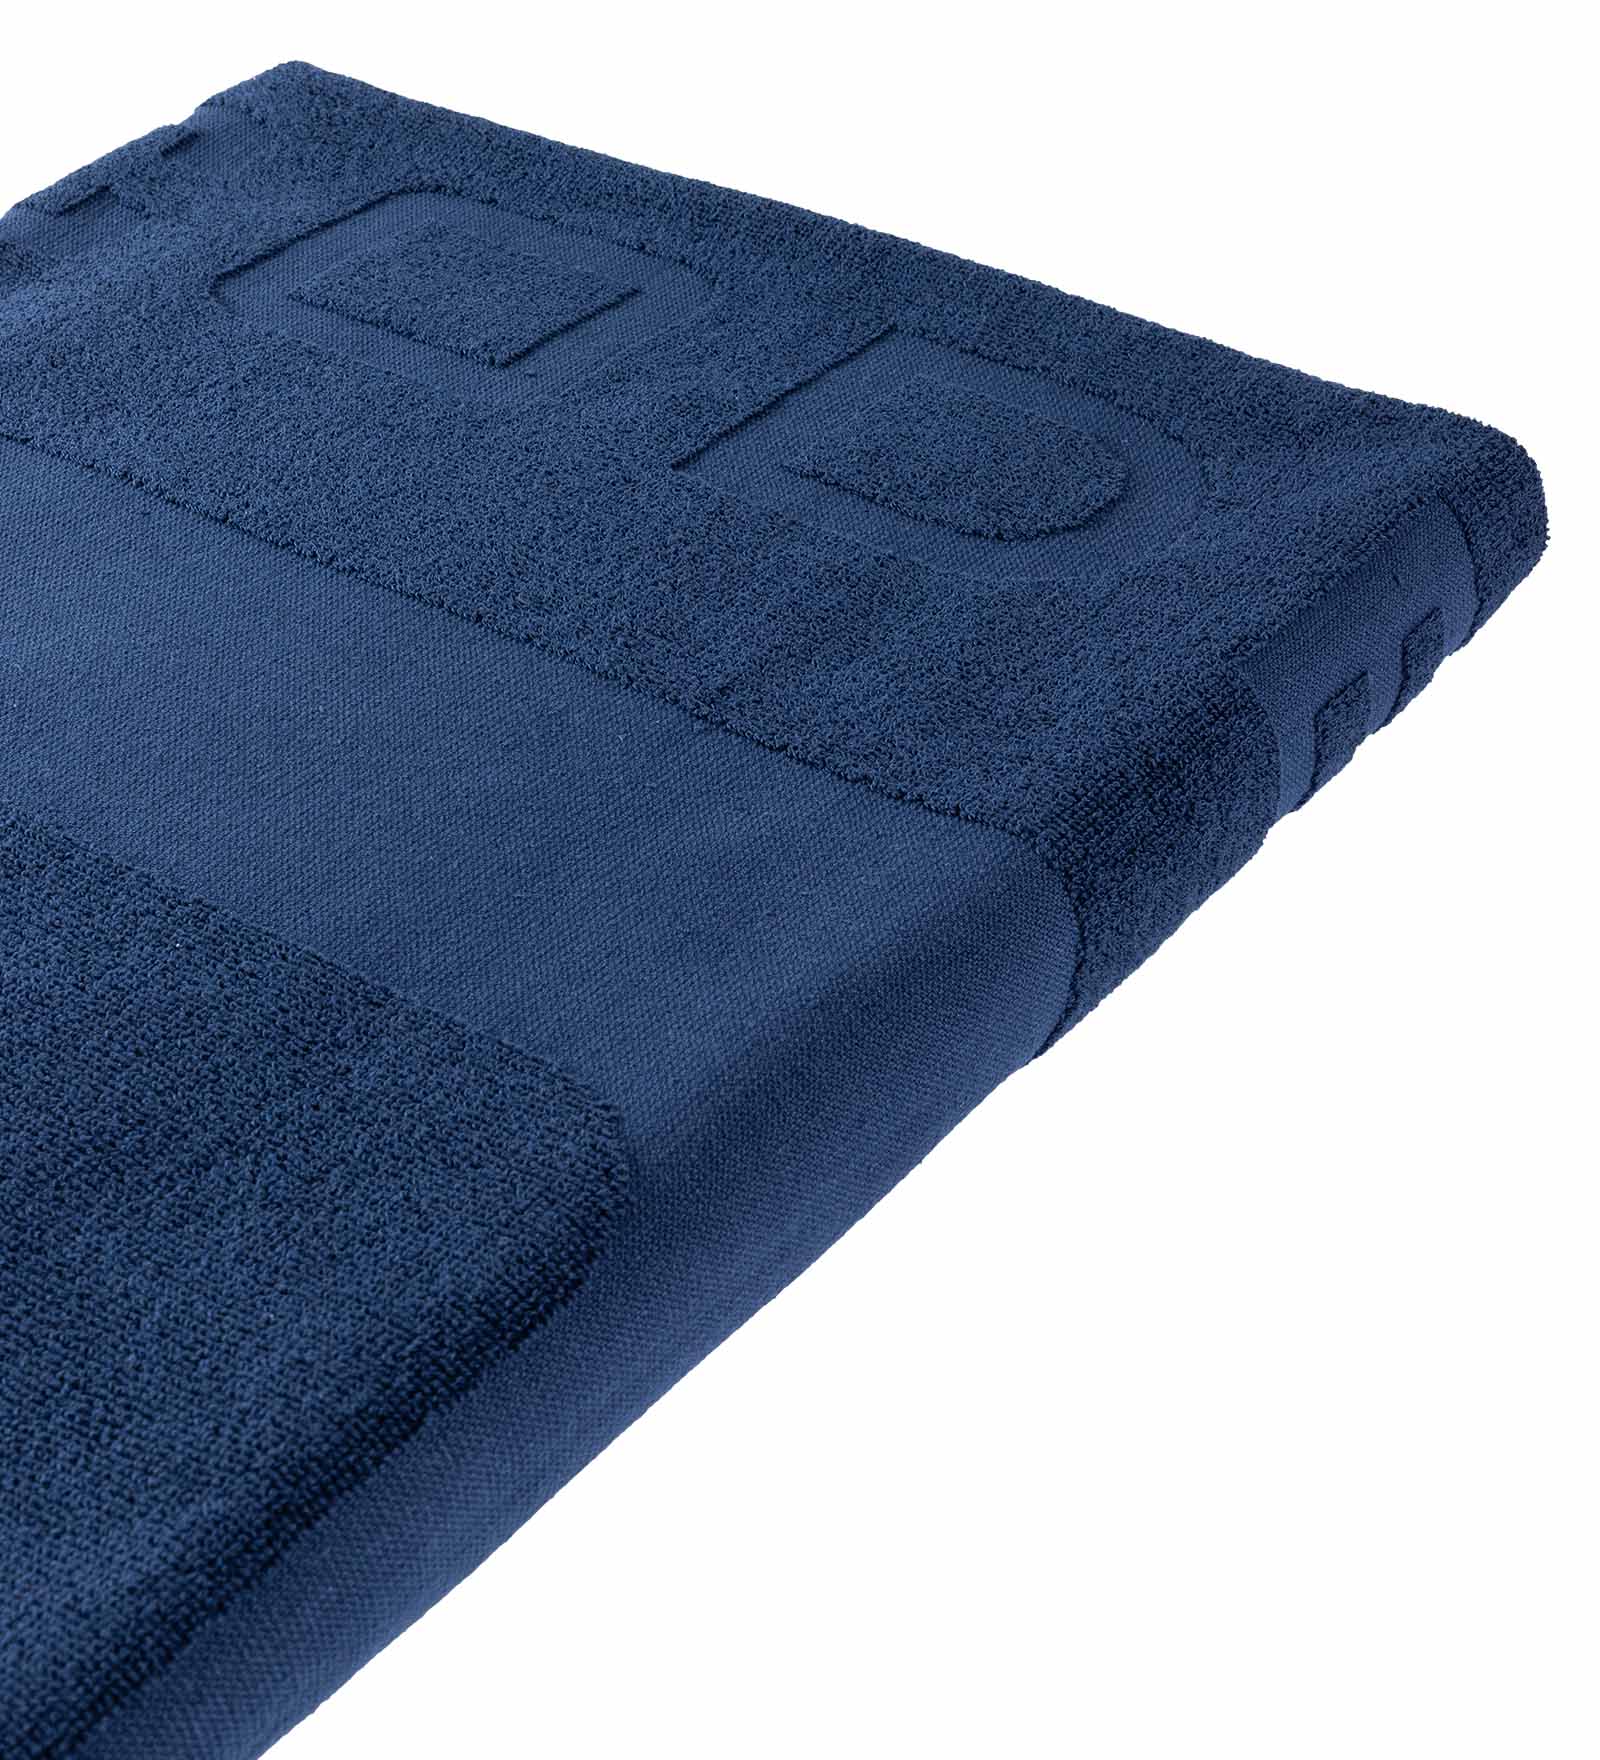 Beach towel navy blue